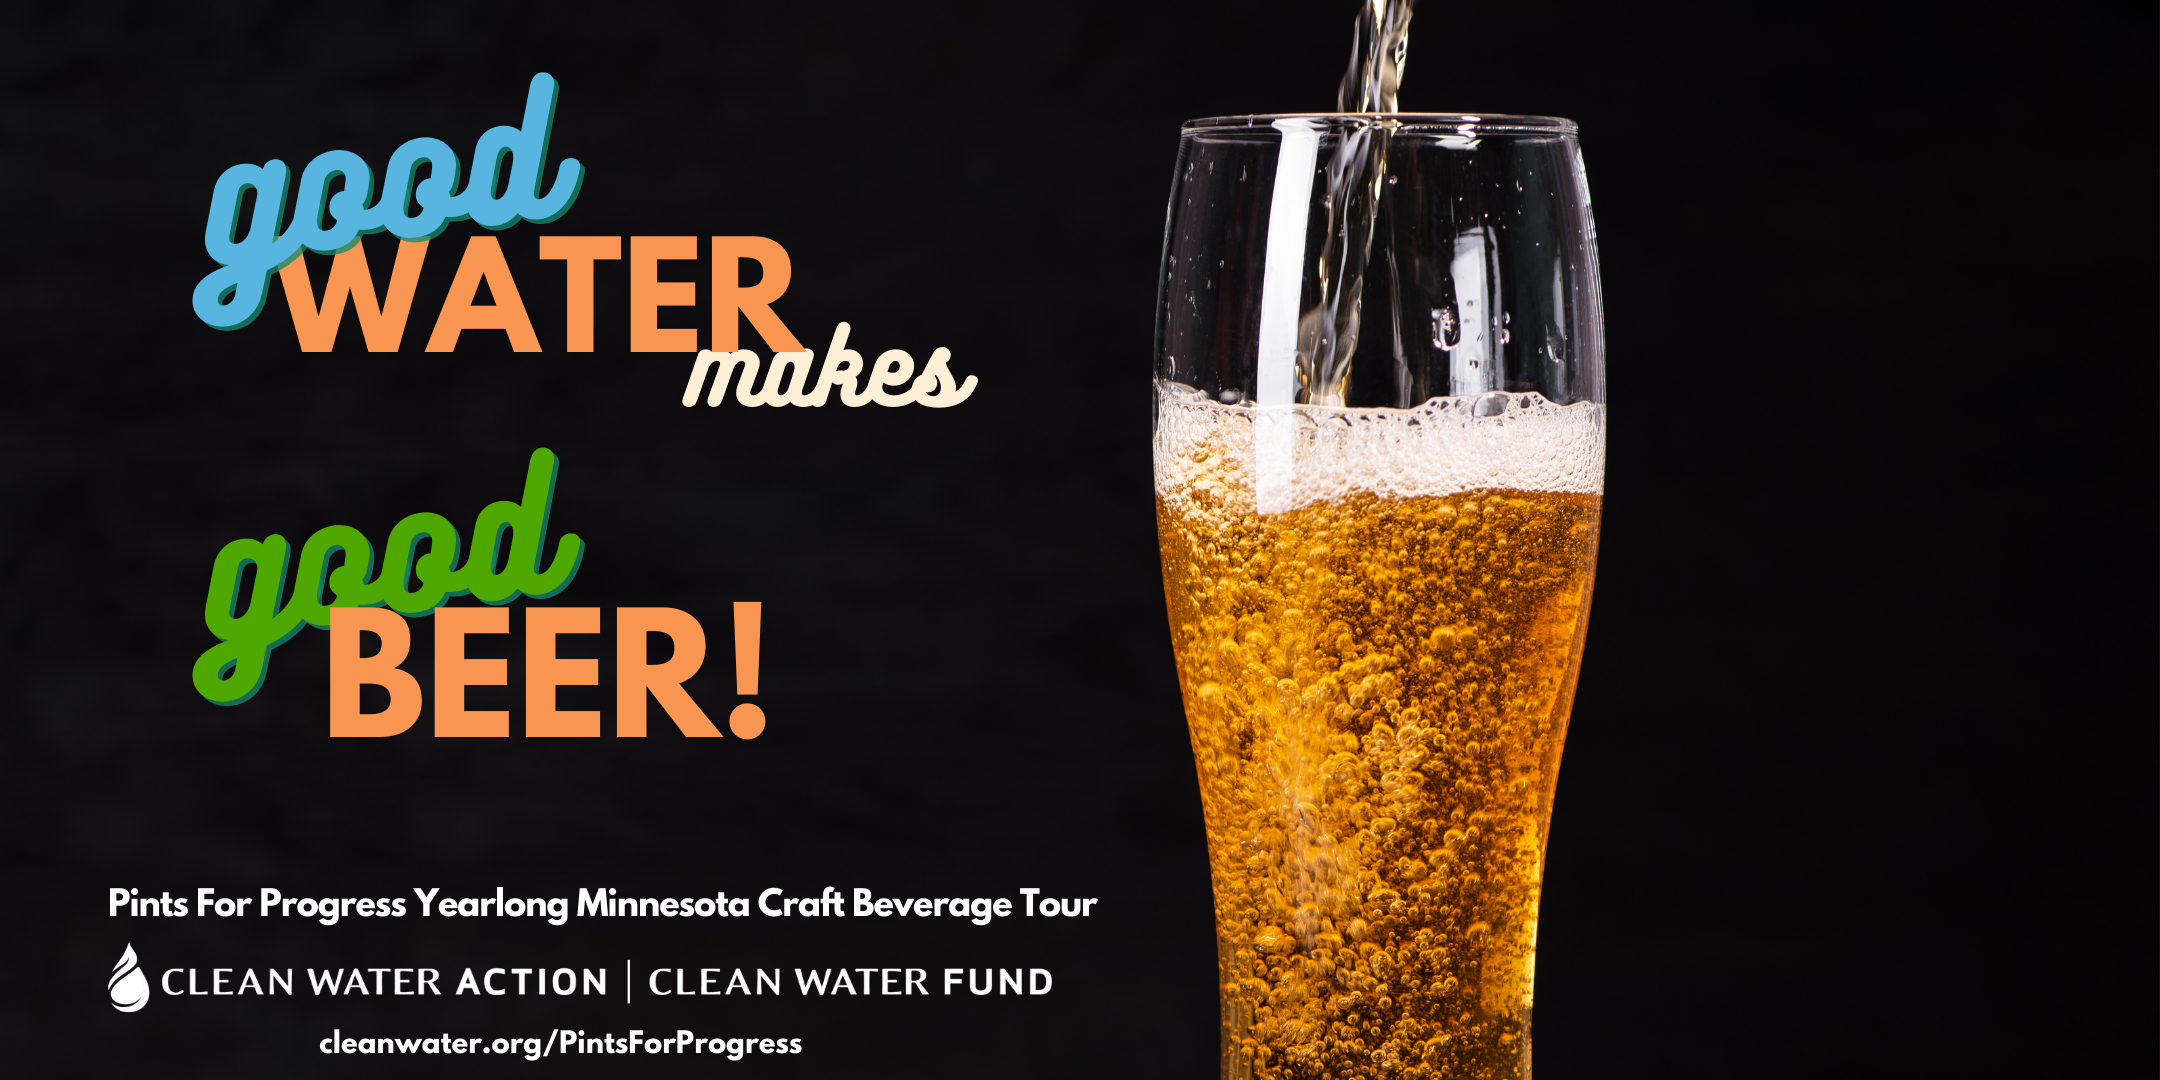 Good Water Makes Good Beer! Pints For Progress Yearlong Minnesota Craft Beverage Tour.